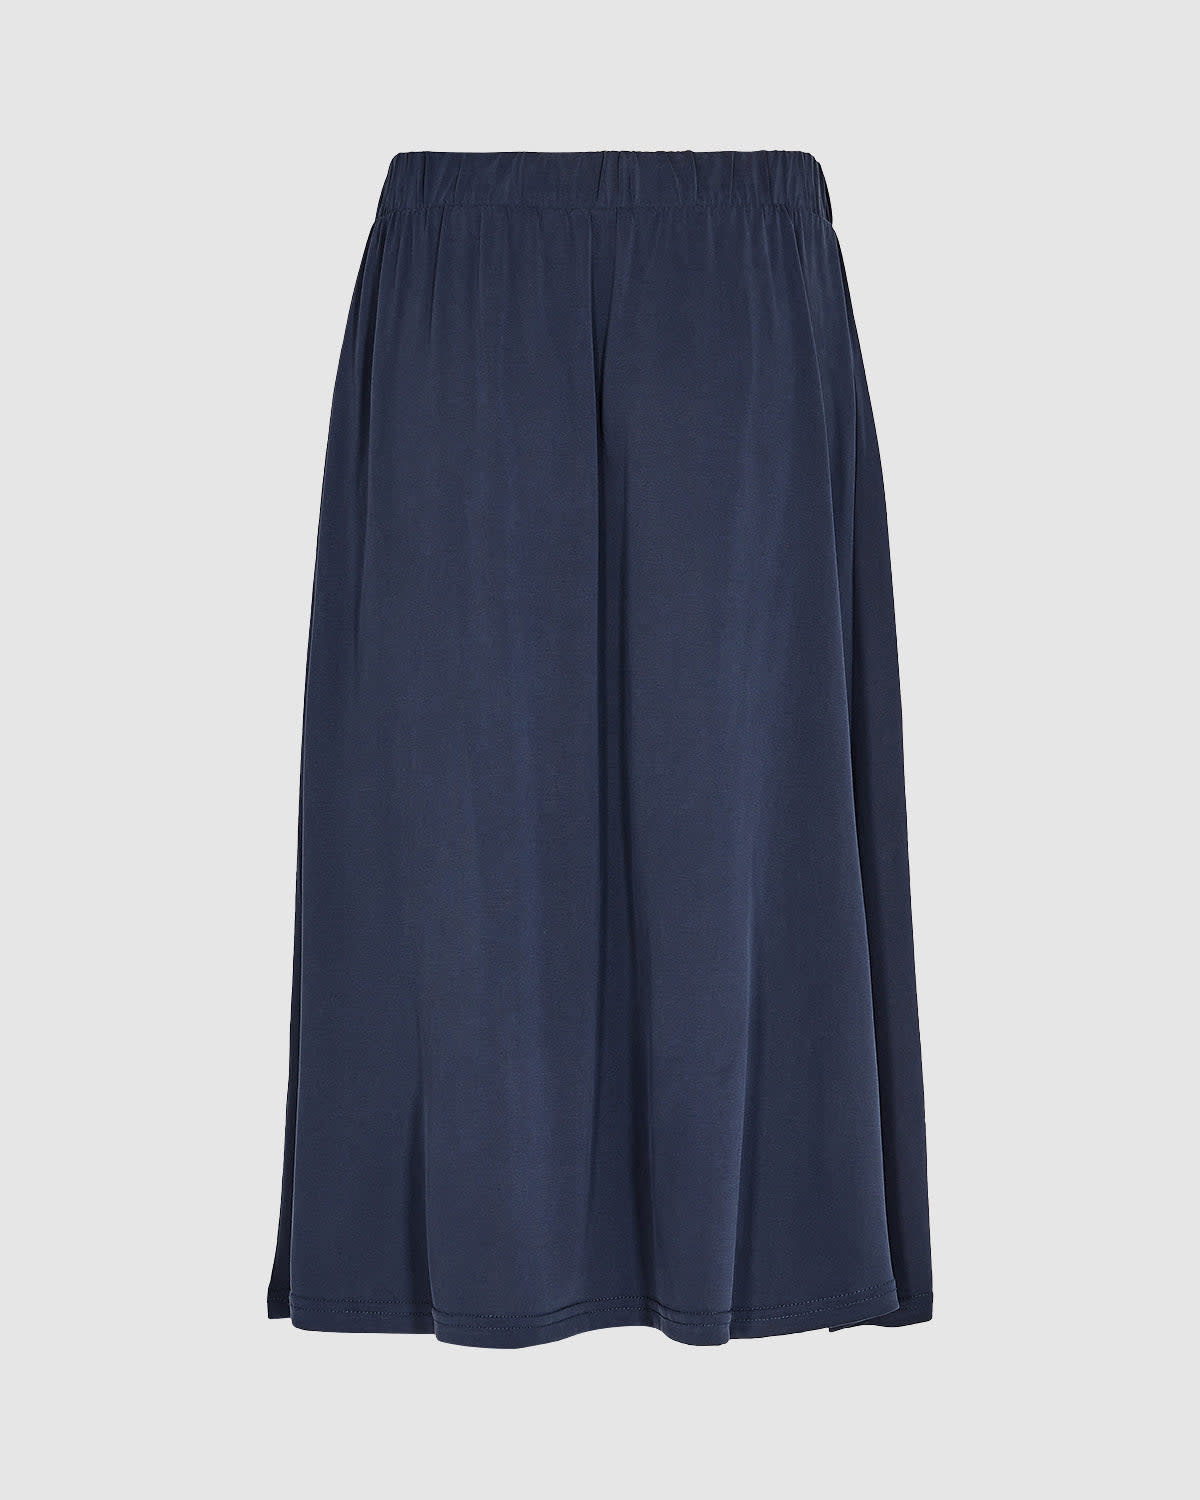 Minimum Minimum, Regisse Skirt, navy blazer, L